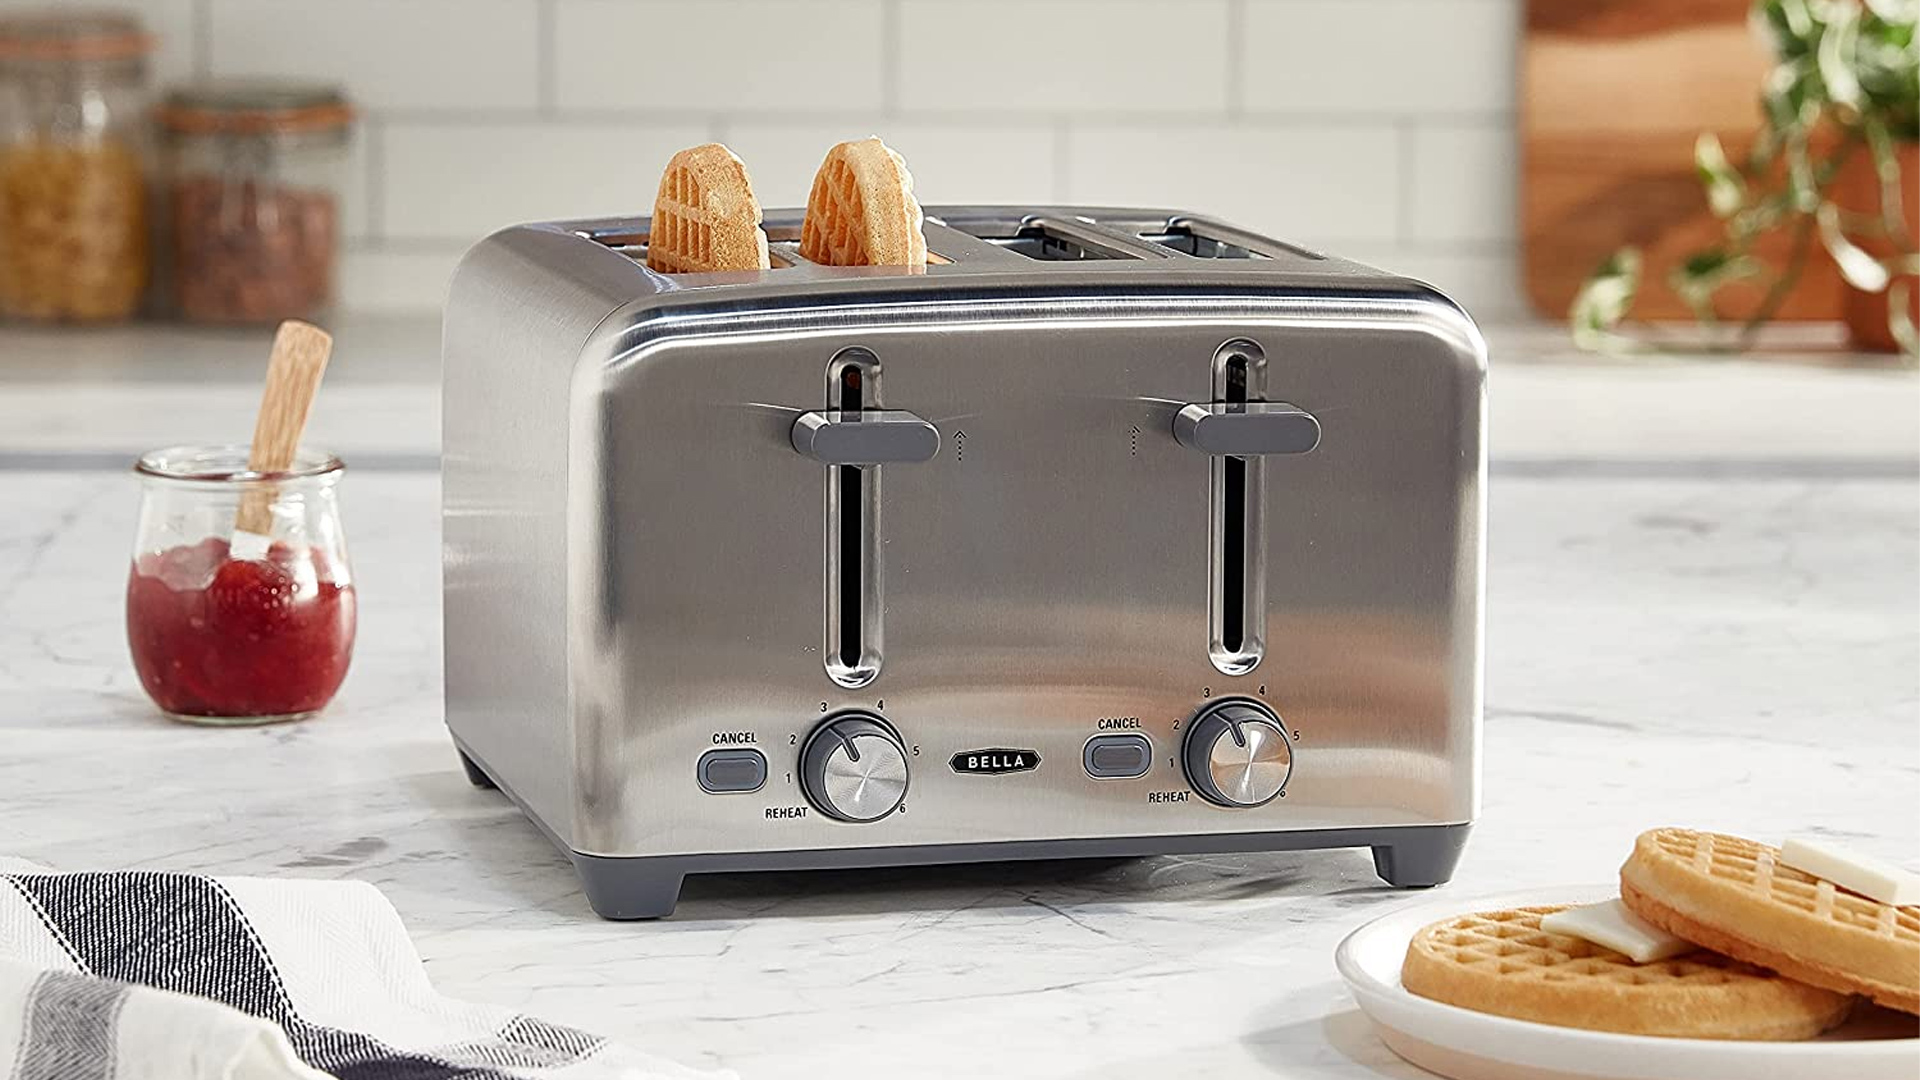 https://9to5toys.com/wp-content/uploads/sites/5/2022/02/bella-4-slice-toaster.jpg